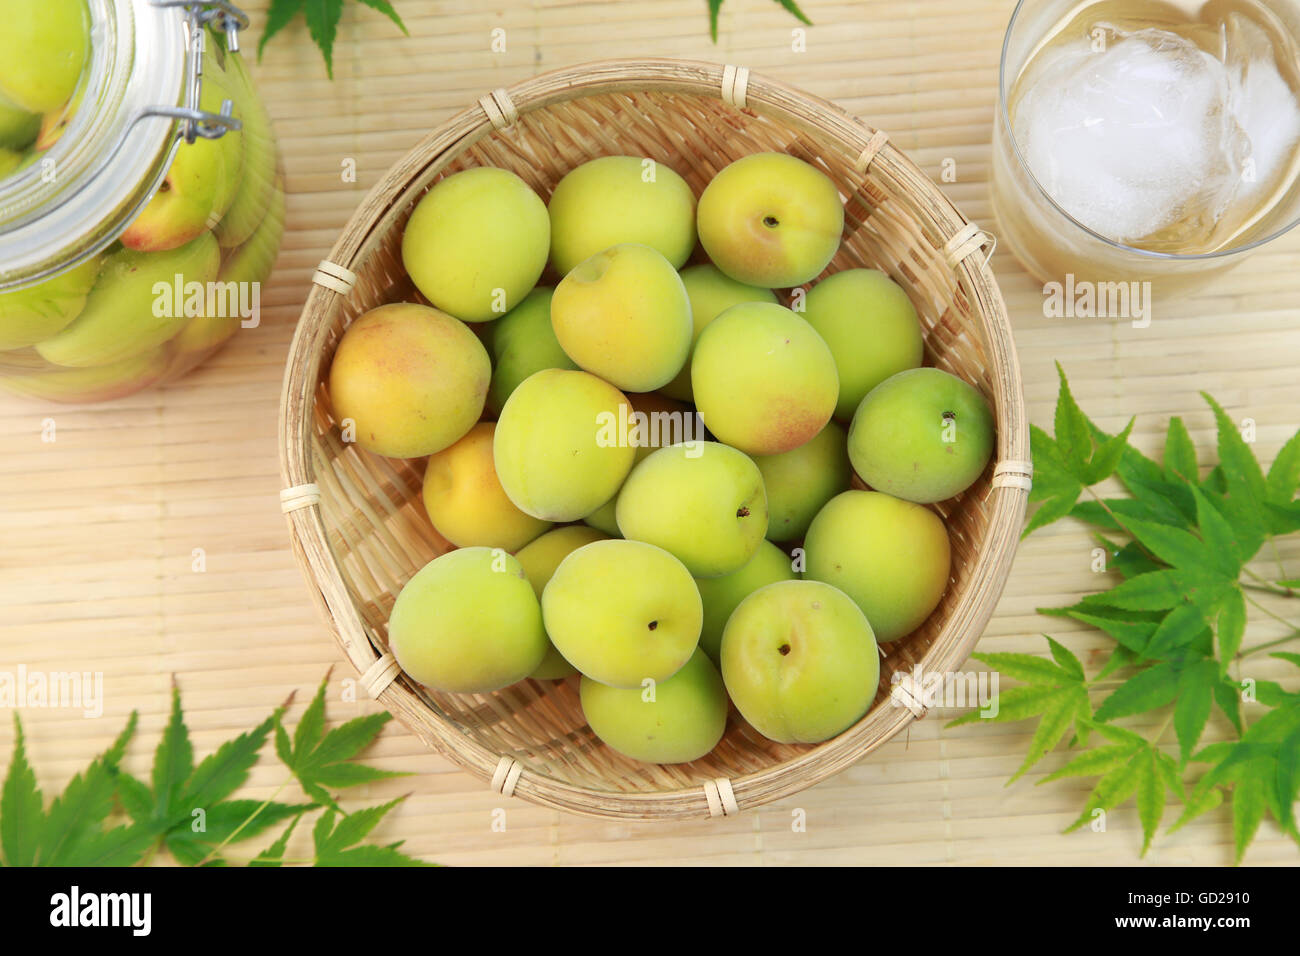 Green ume(Japanese apricot) Stock Photo